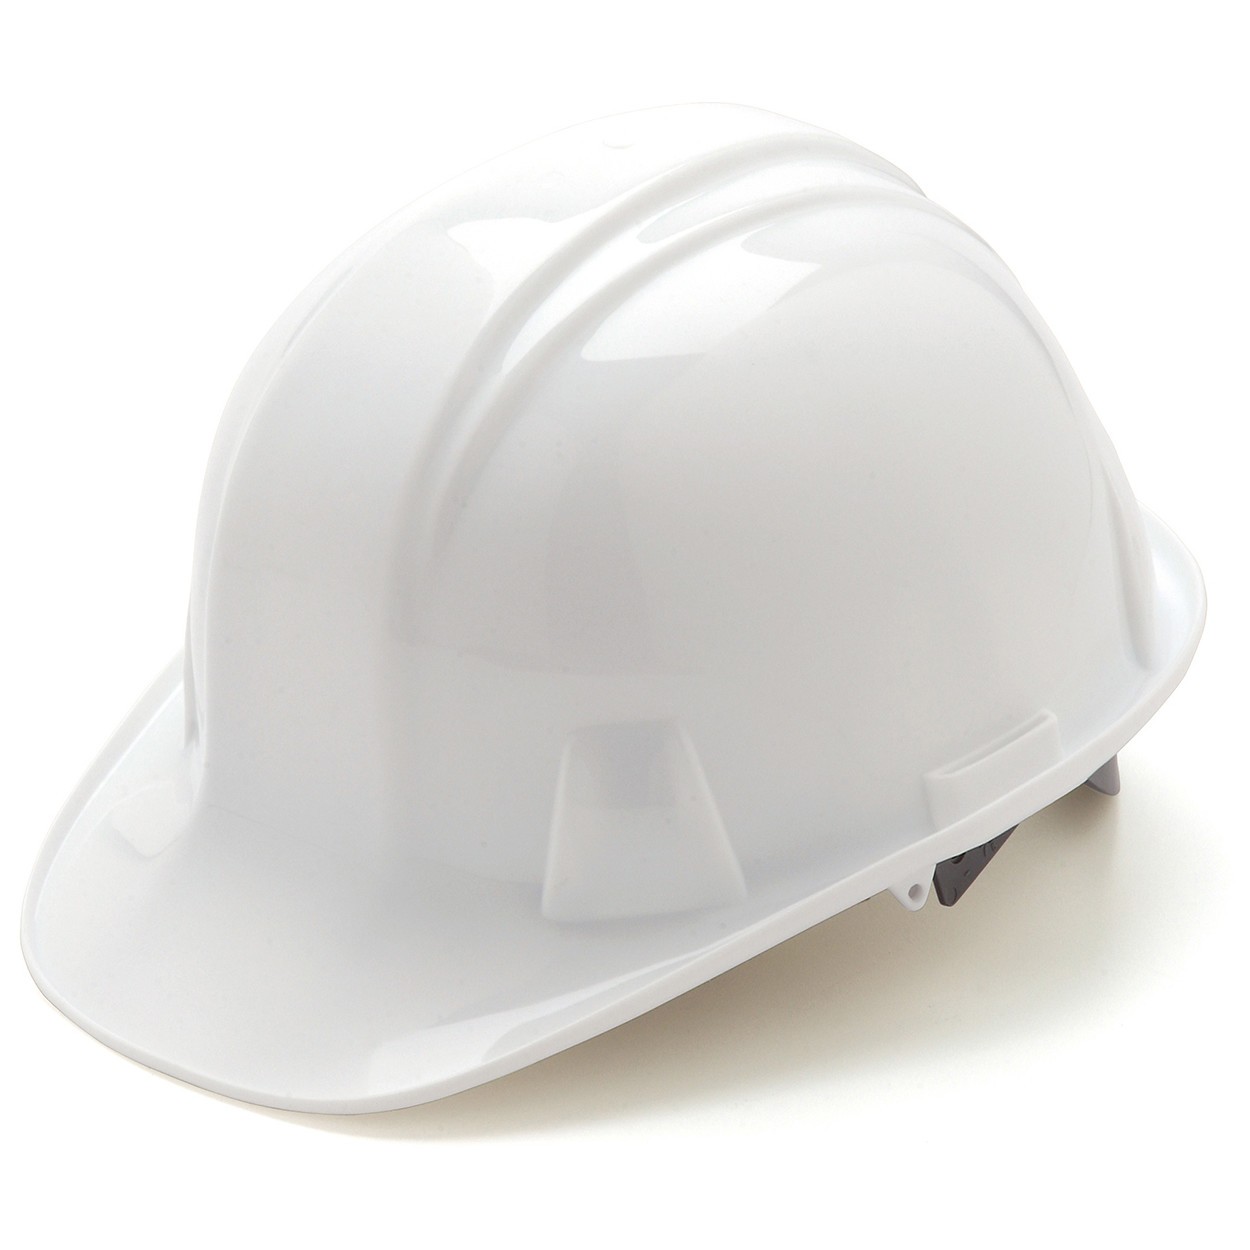 PYRAMEX FULL BRIM SAFETY HARD HAT WHITE W/ 4 POINT RATCHET CONSTRUCTION 12 HATS 